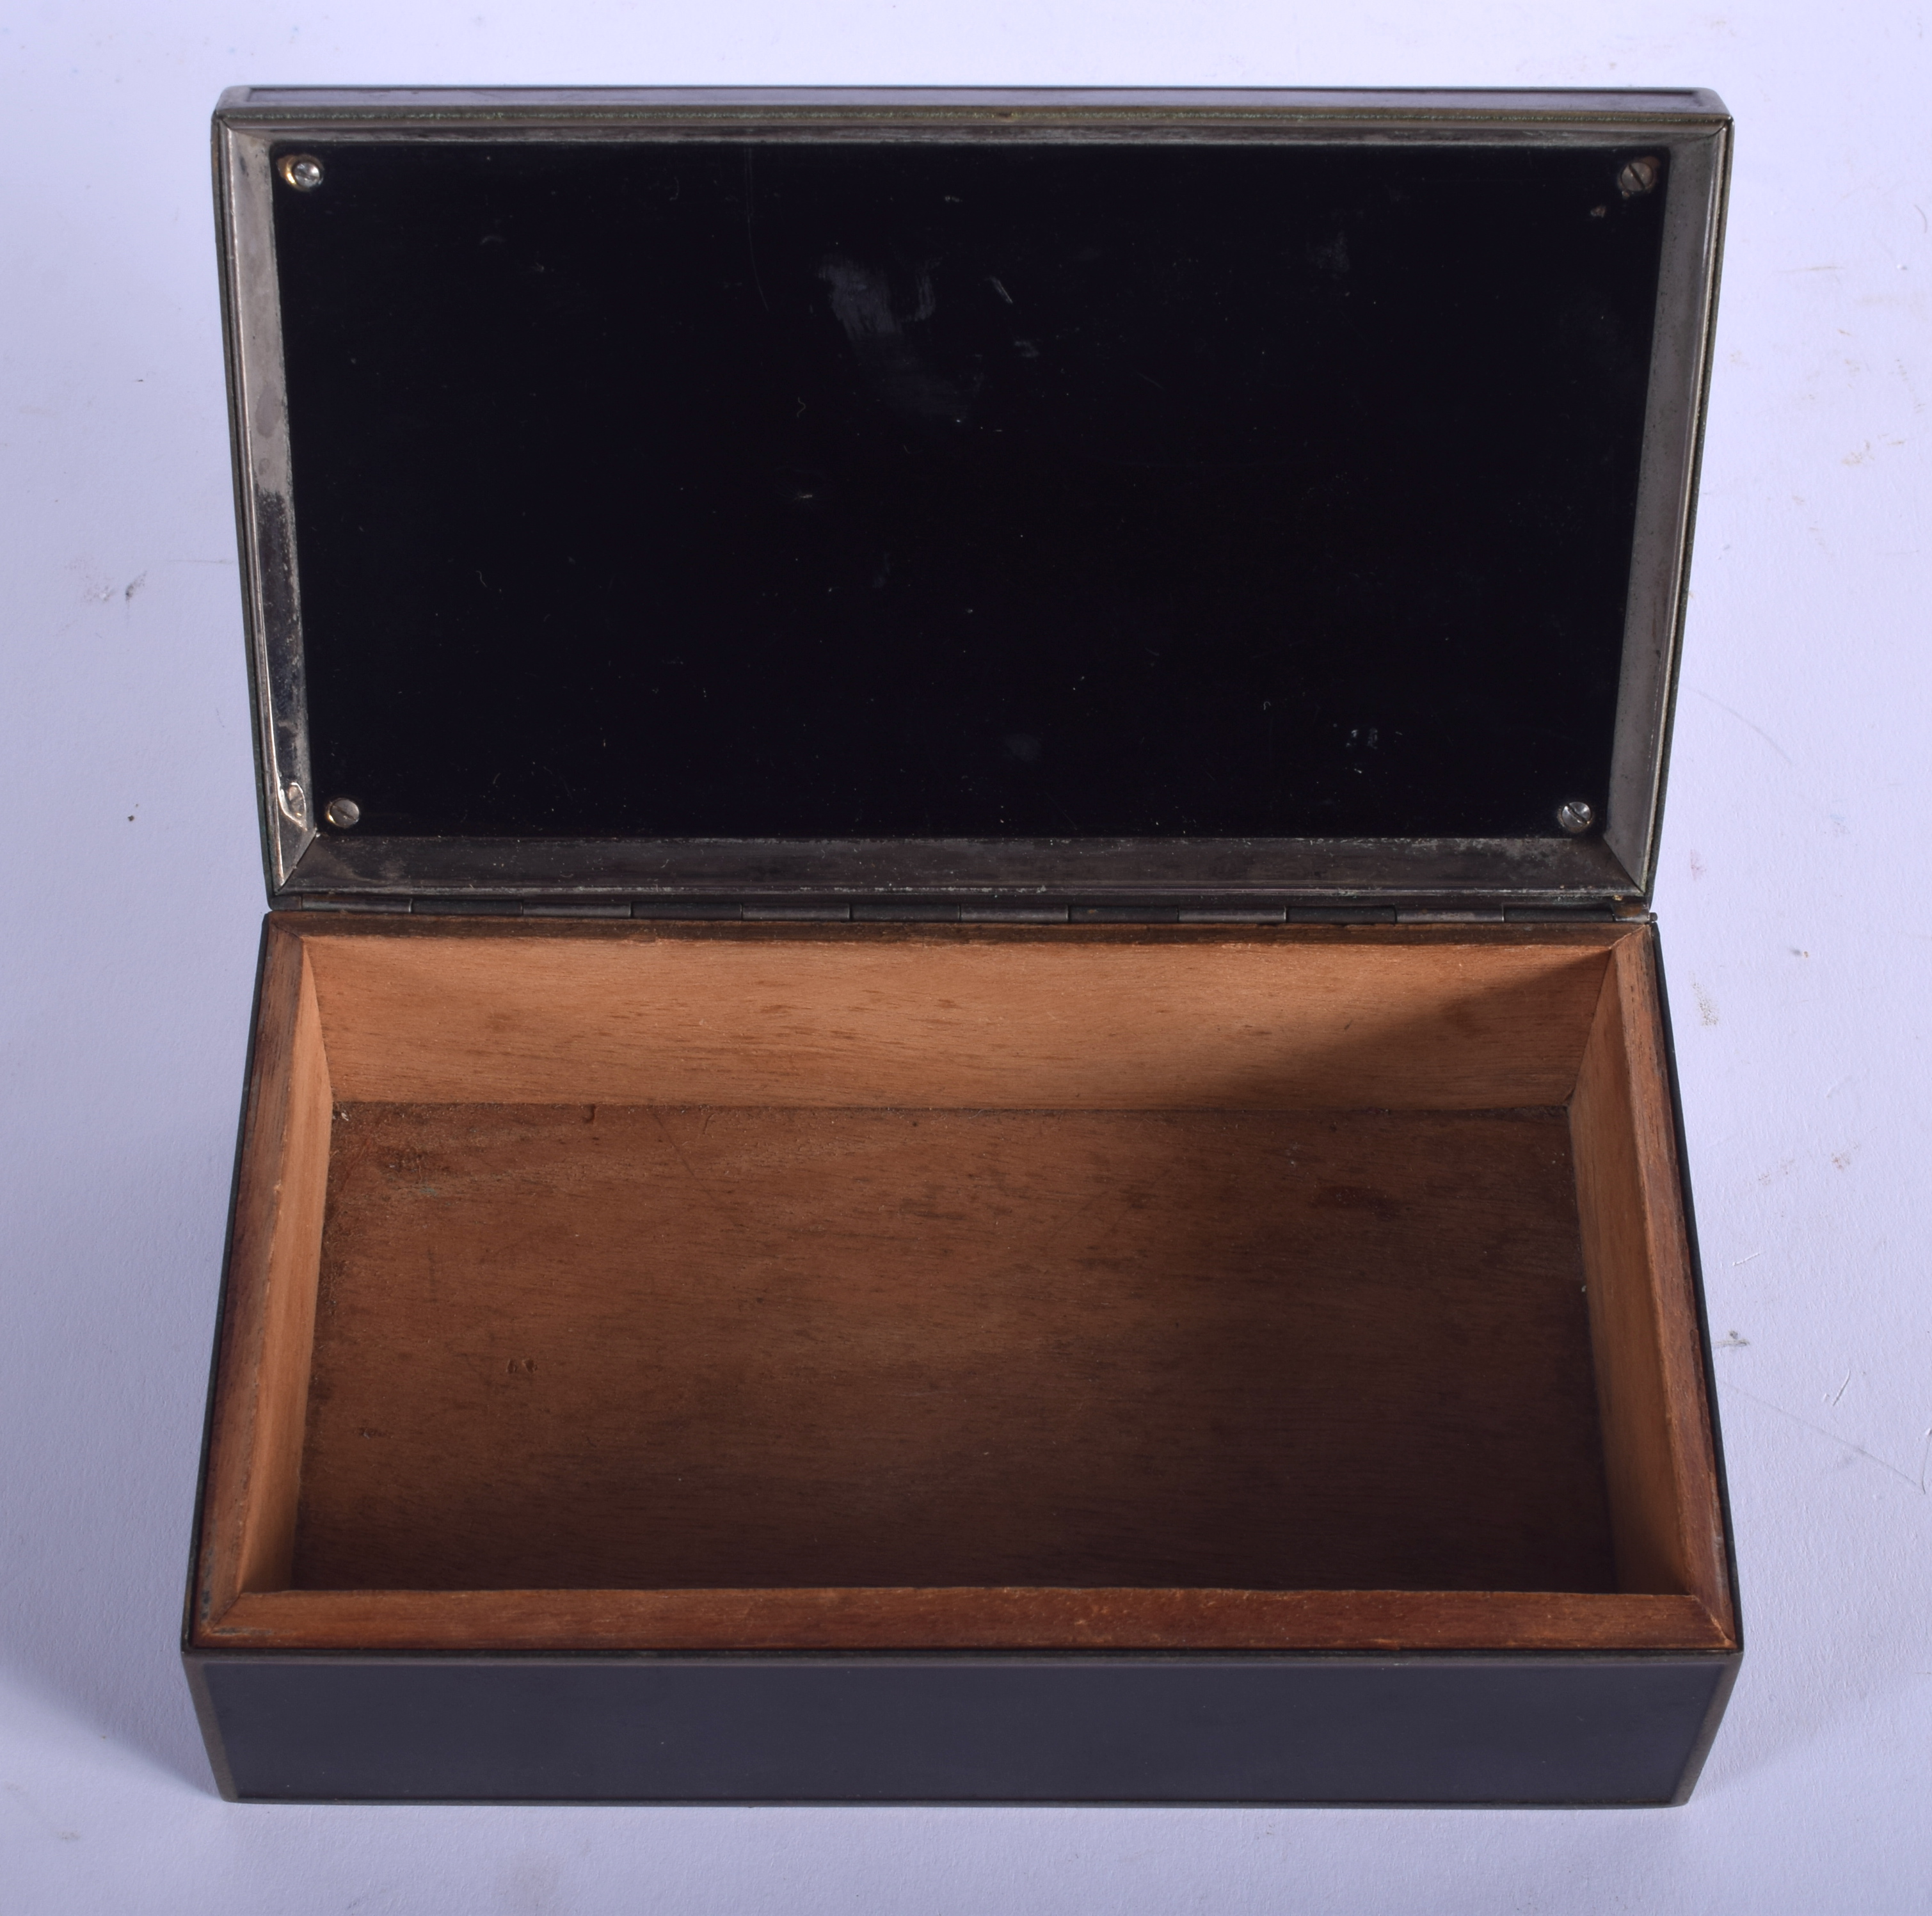 AN ART DECO COLD PAINTED DOGGY CIGARETTE BOX. 15 cm x 11 cm. - Image 3 of 3